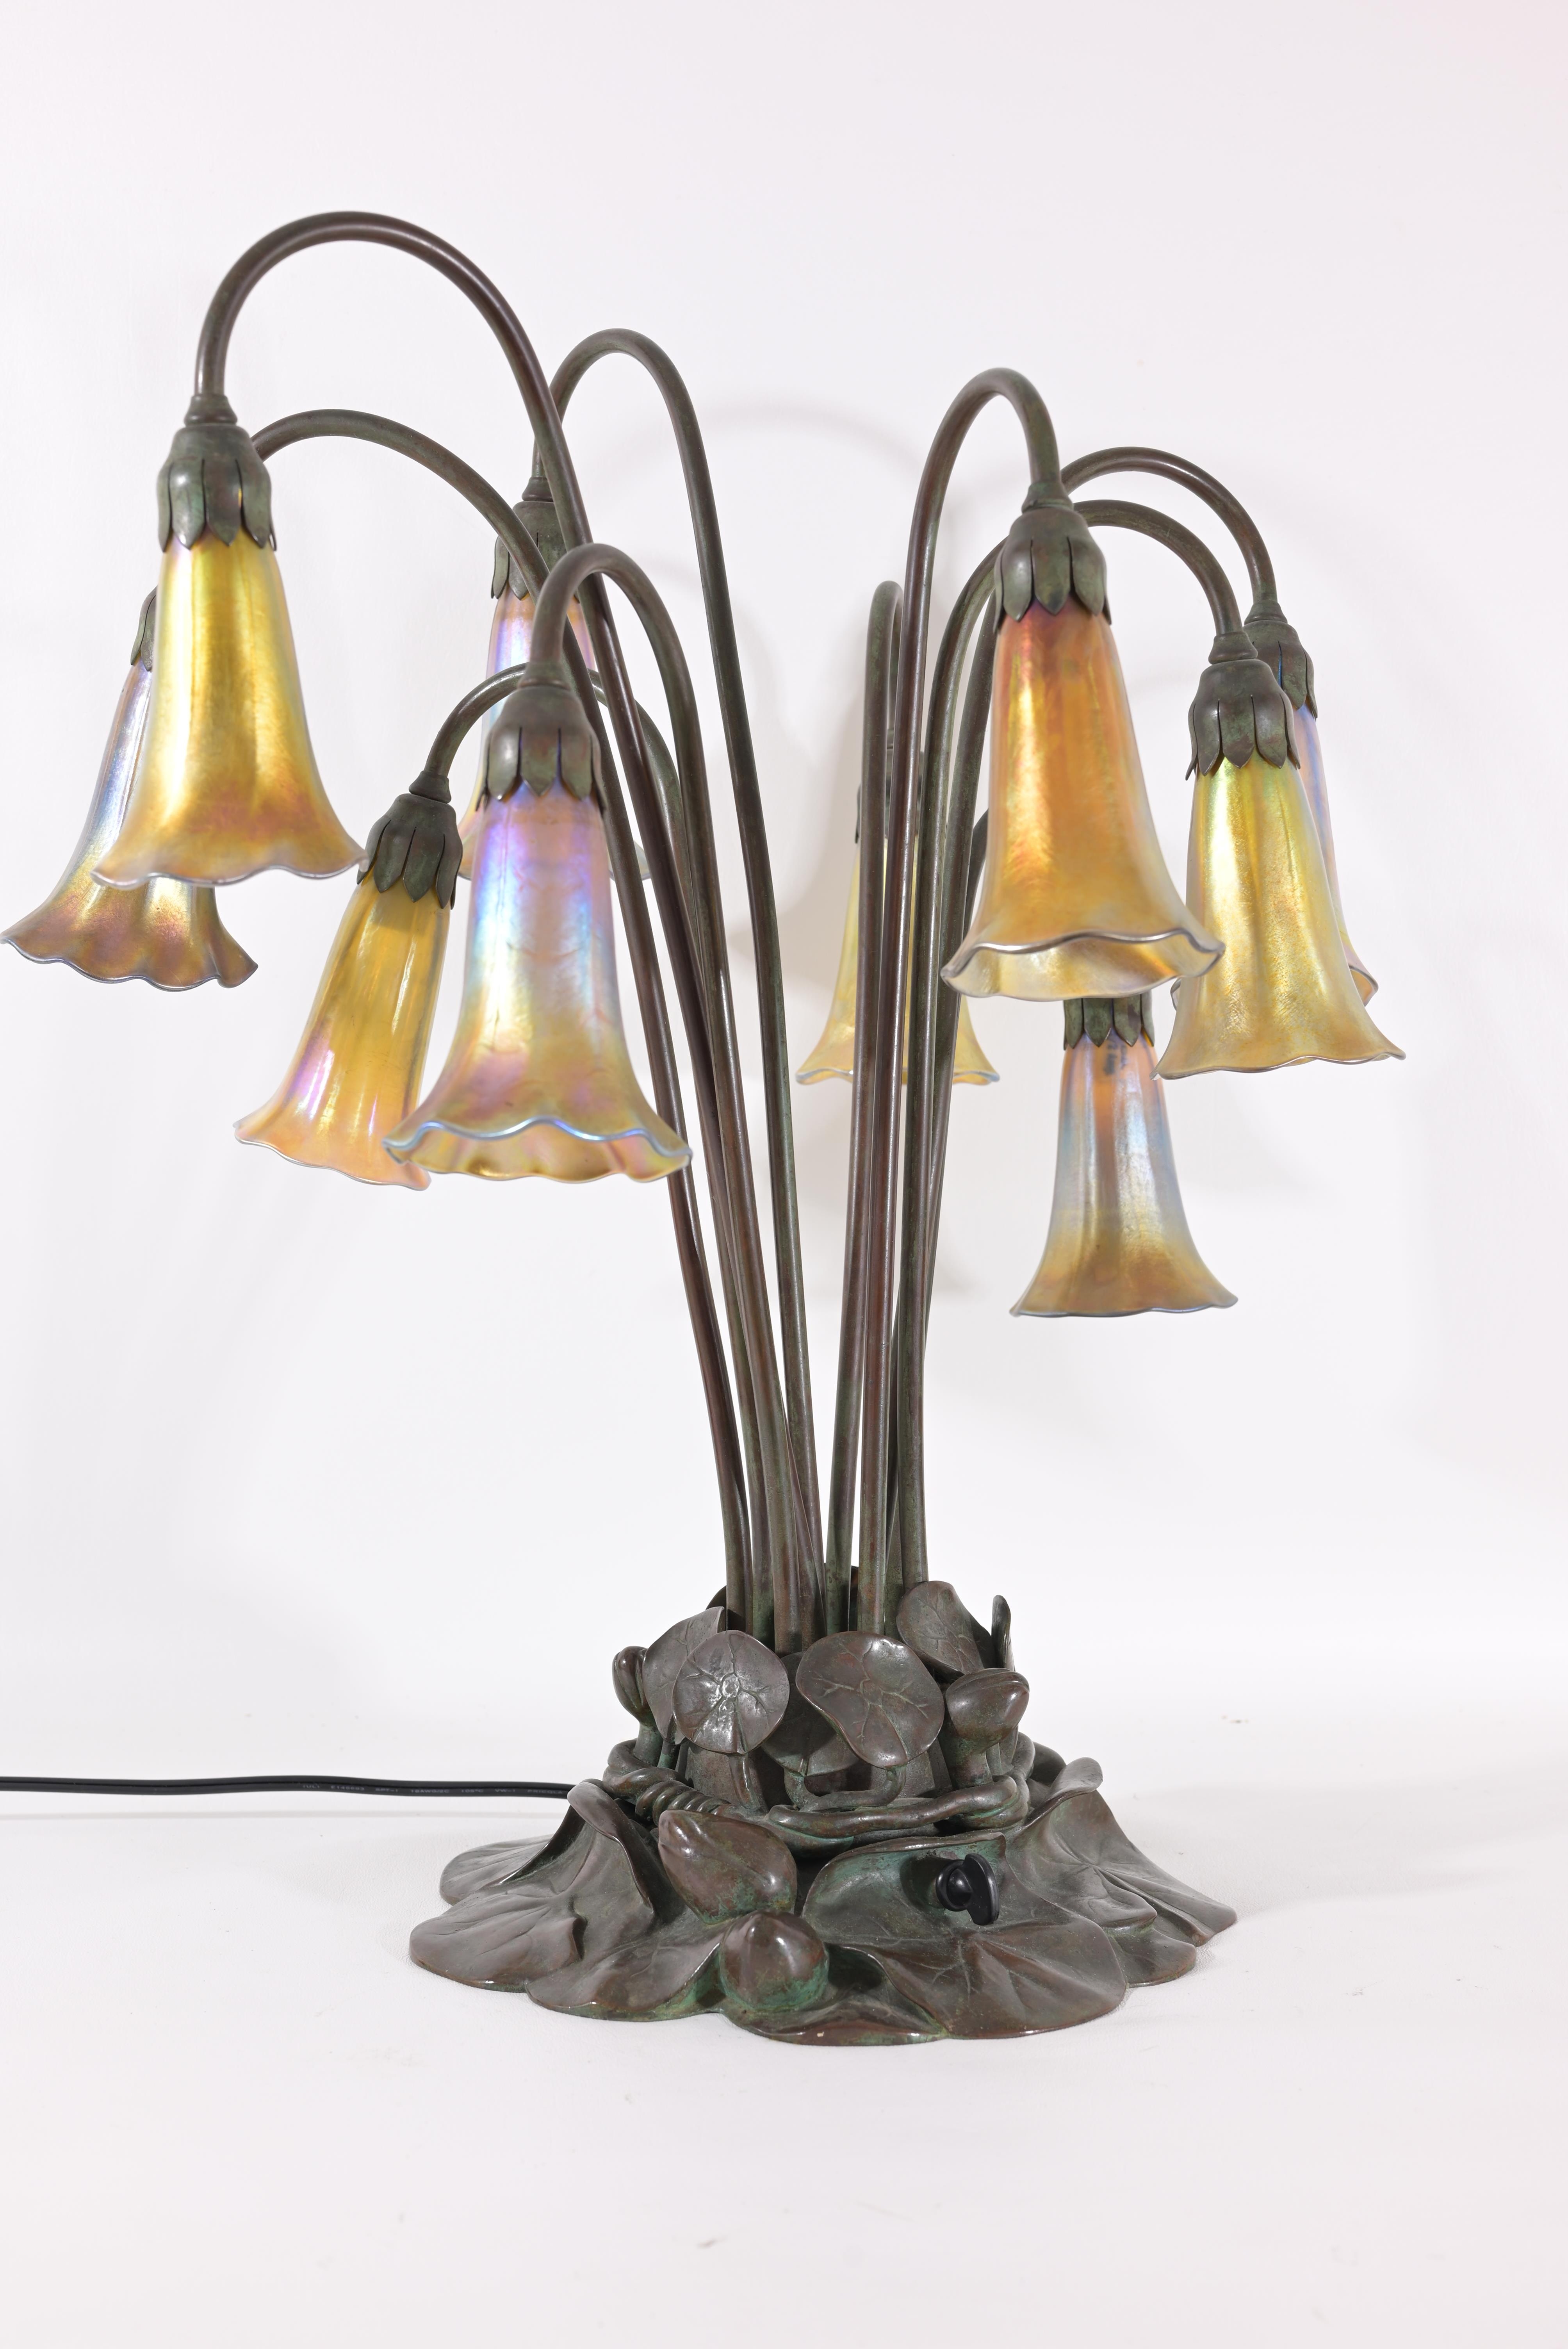 Tiffany Studios Ten Light Lily Lamp - Image 6 of 11